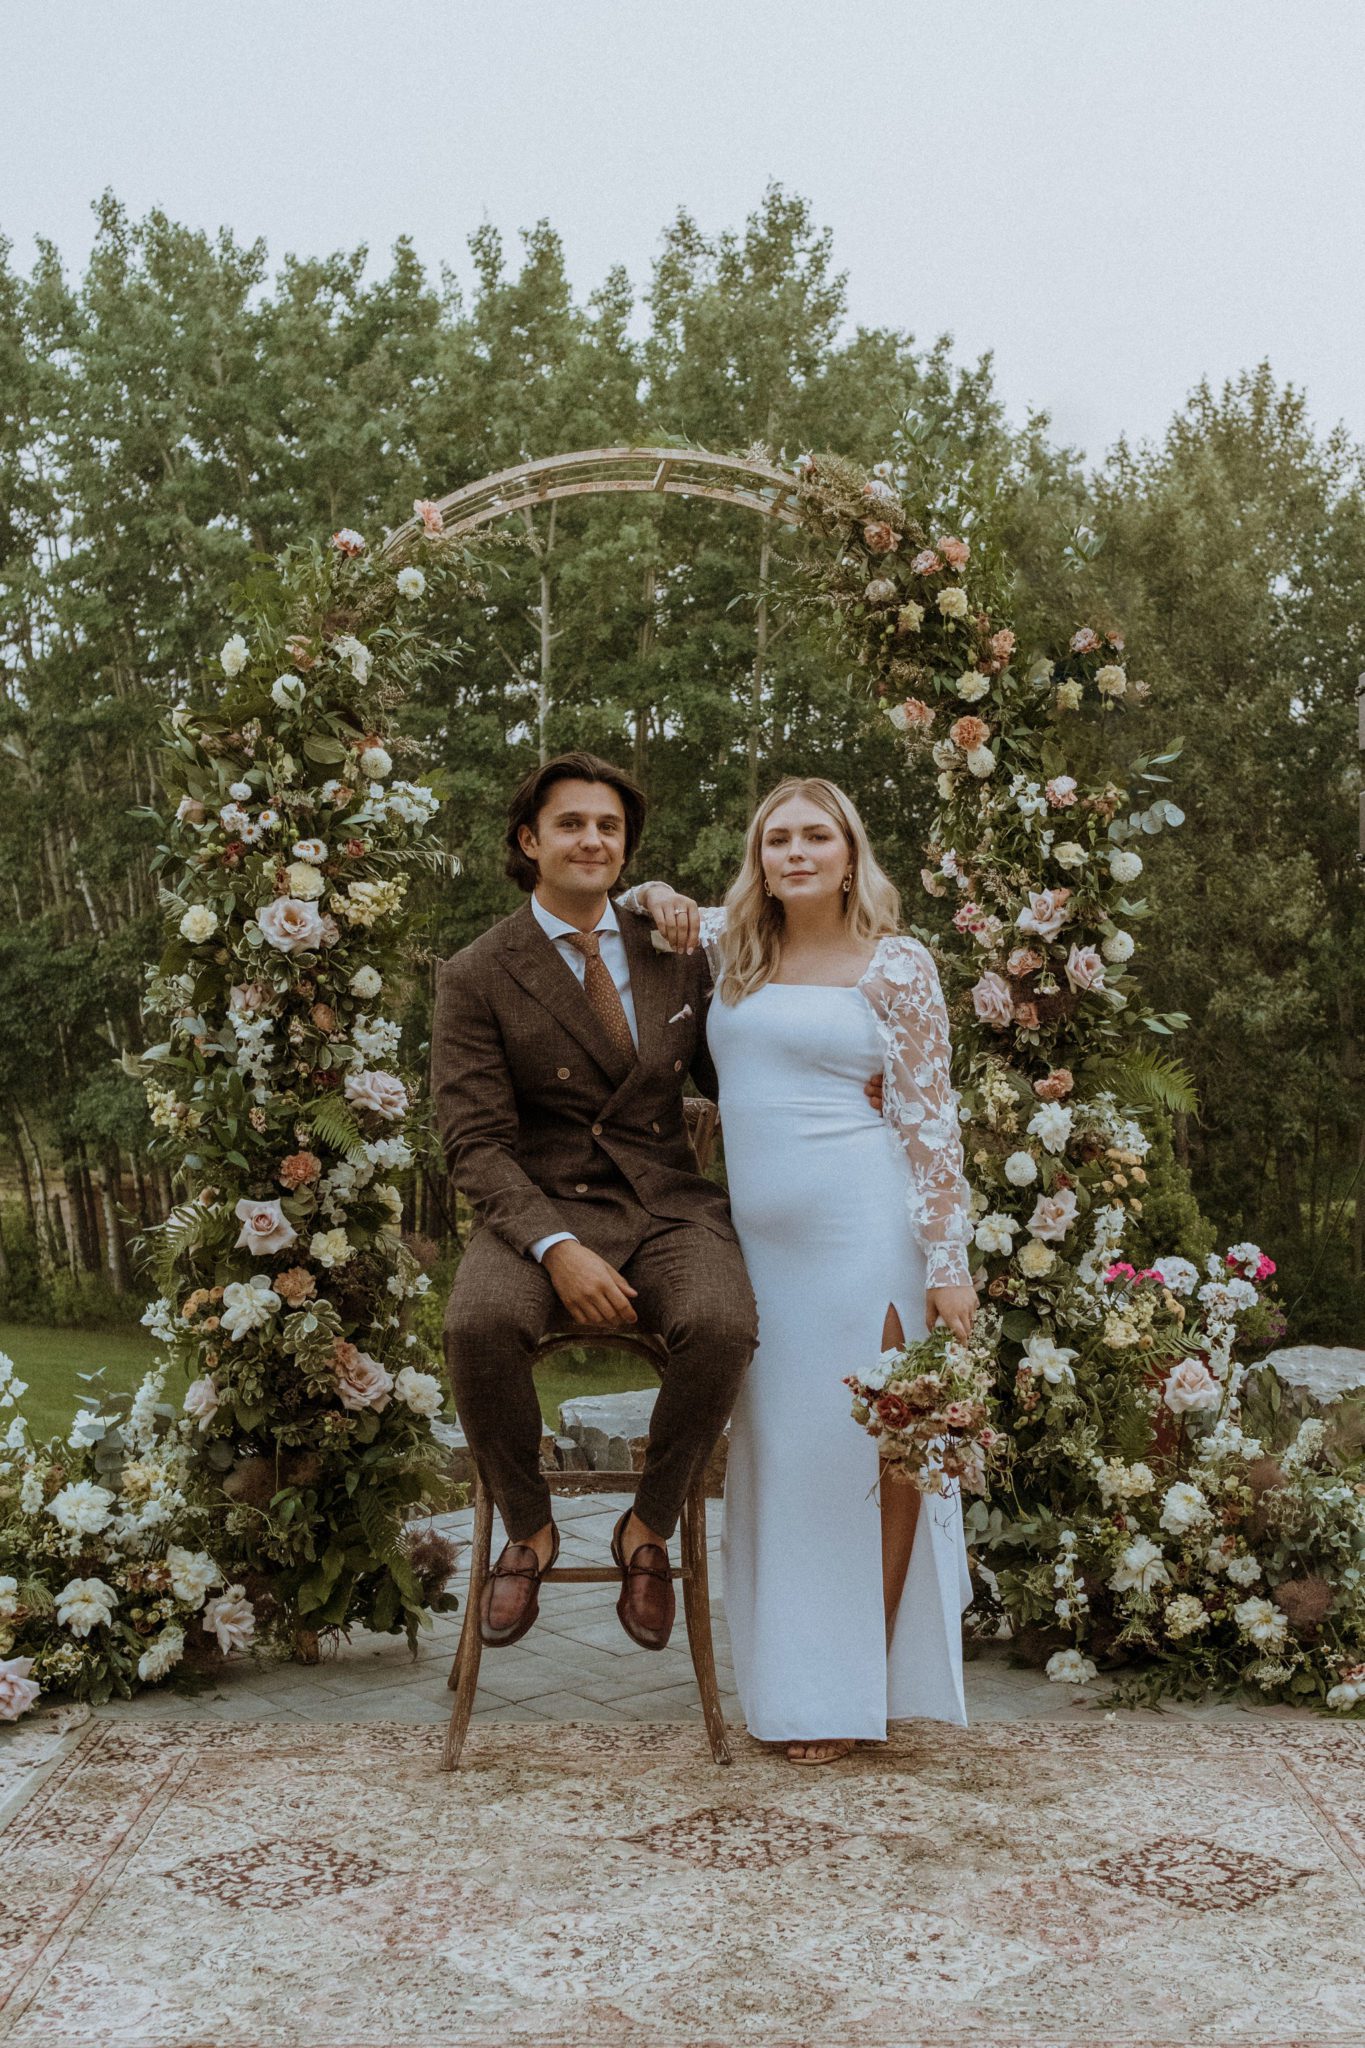 Couple pose for wedding portraits under floral arch, cottage core aesthetic, unique wedding wear